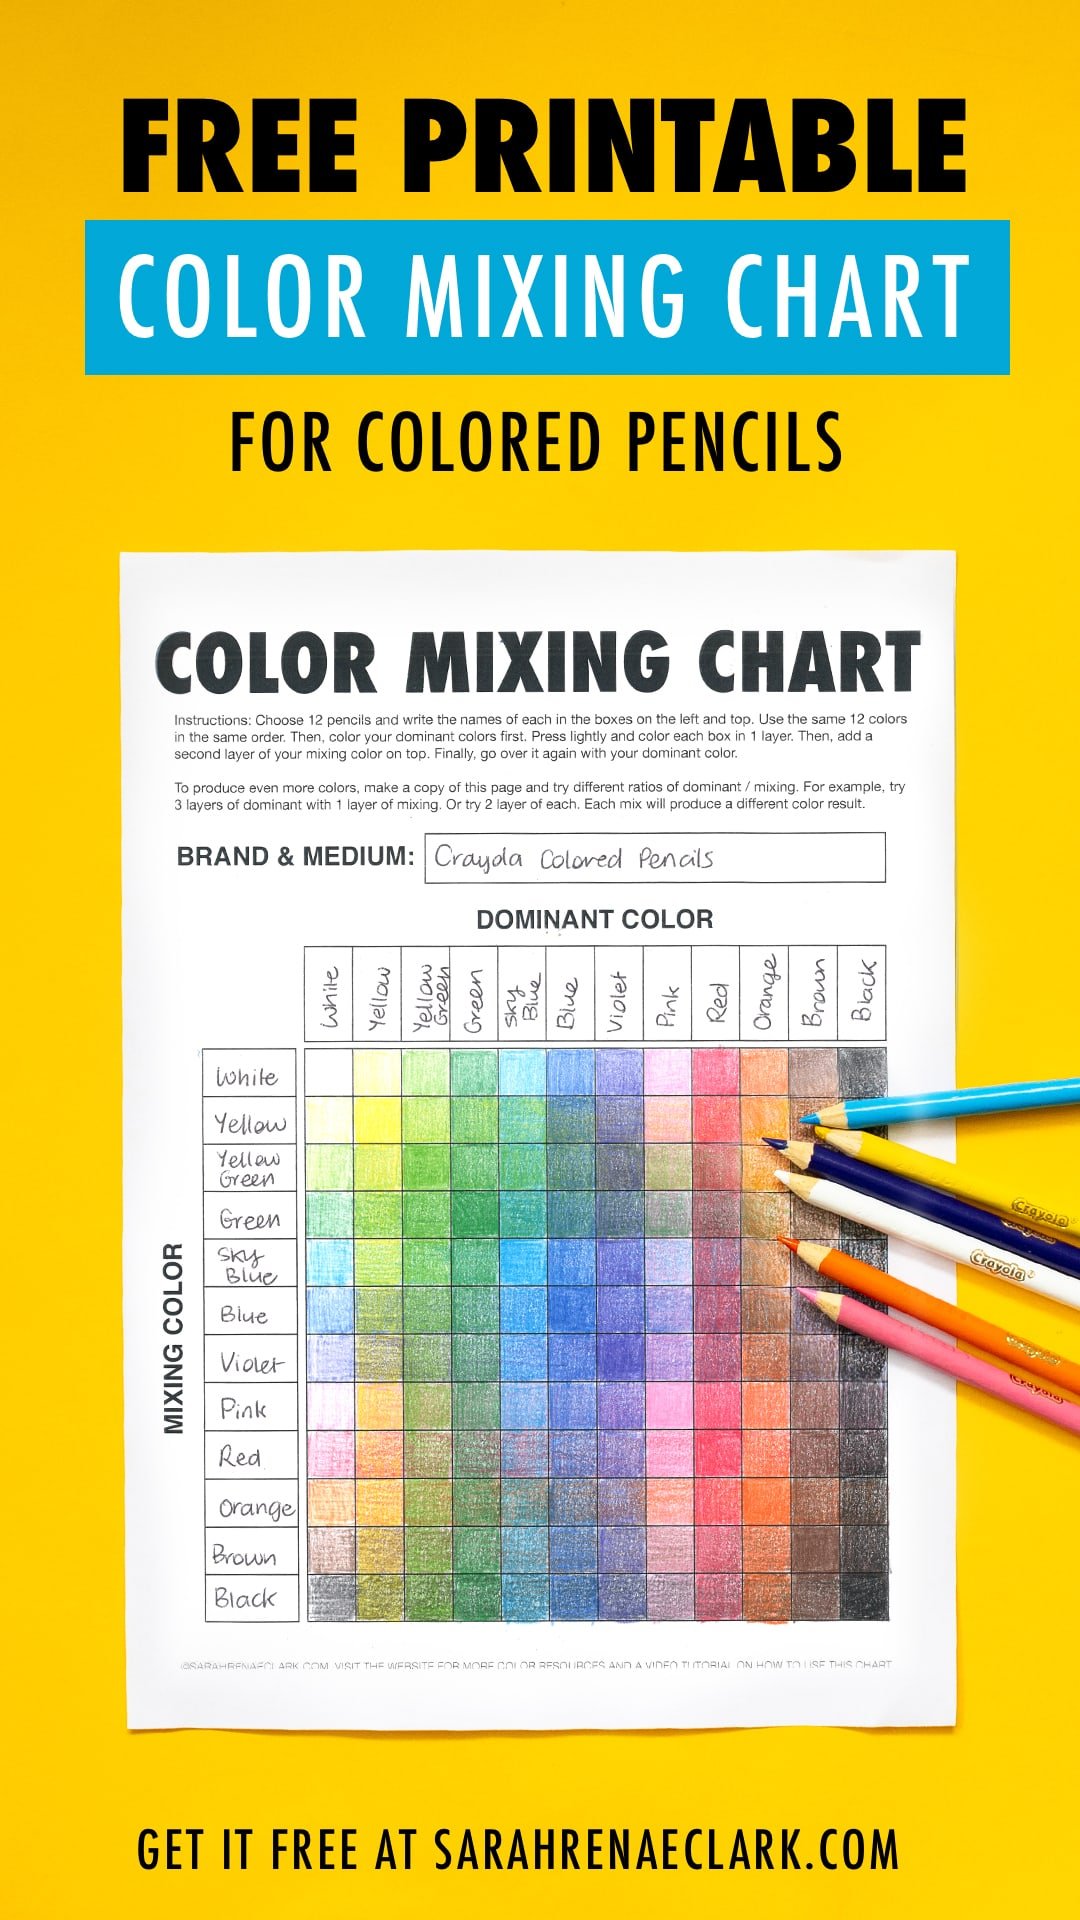 FREE color mixing chart 2 - Sarah Renae Clark - Coloring Book Artist